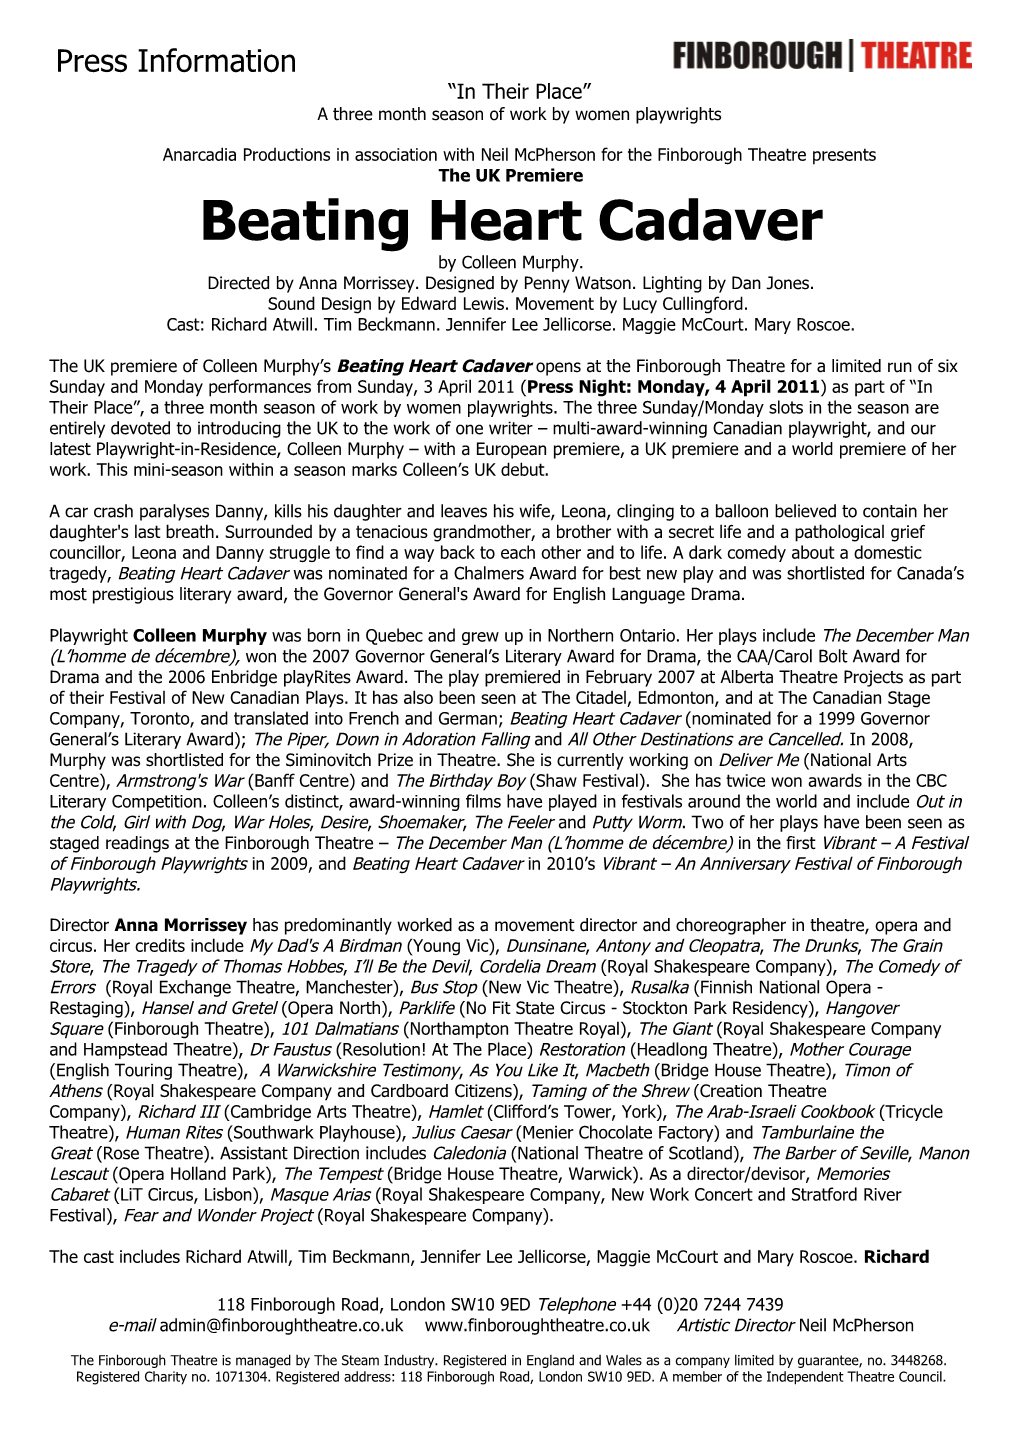 Beating Heart Cadaver by Colleen Murphy